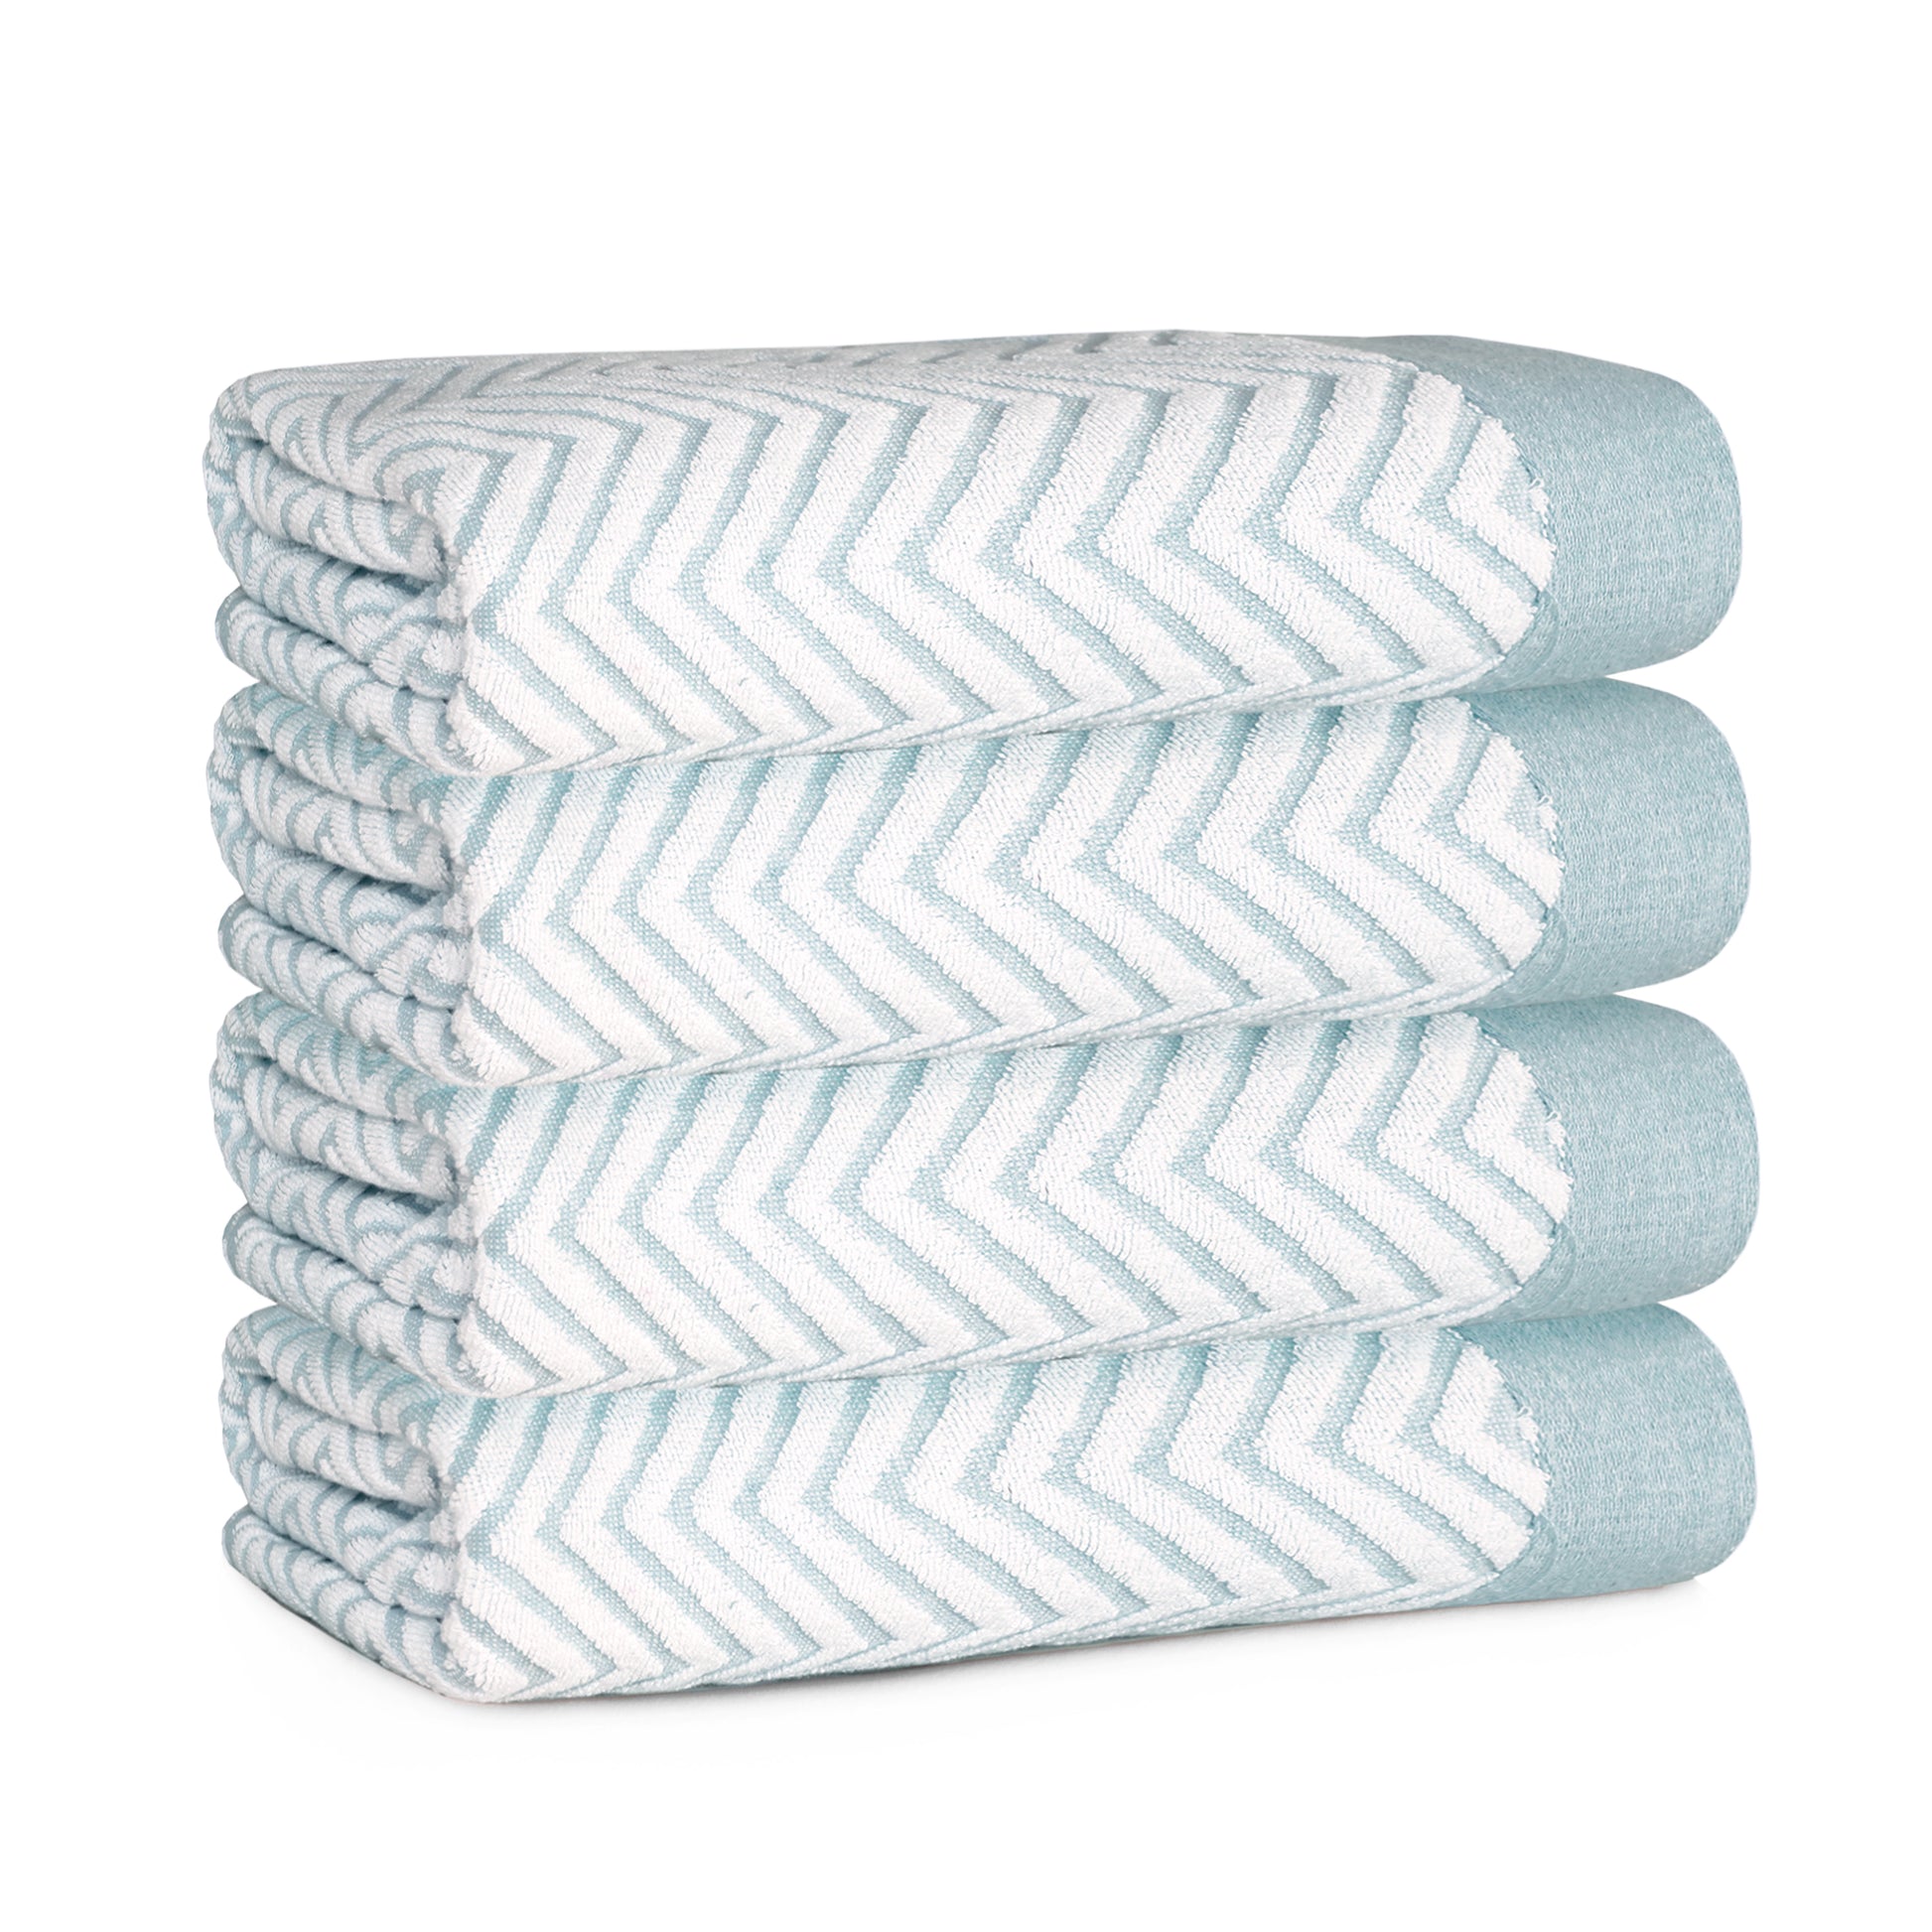 15 x 26 BleachSafe Towels White